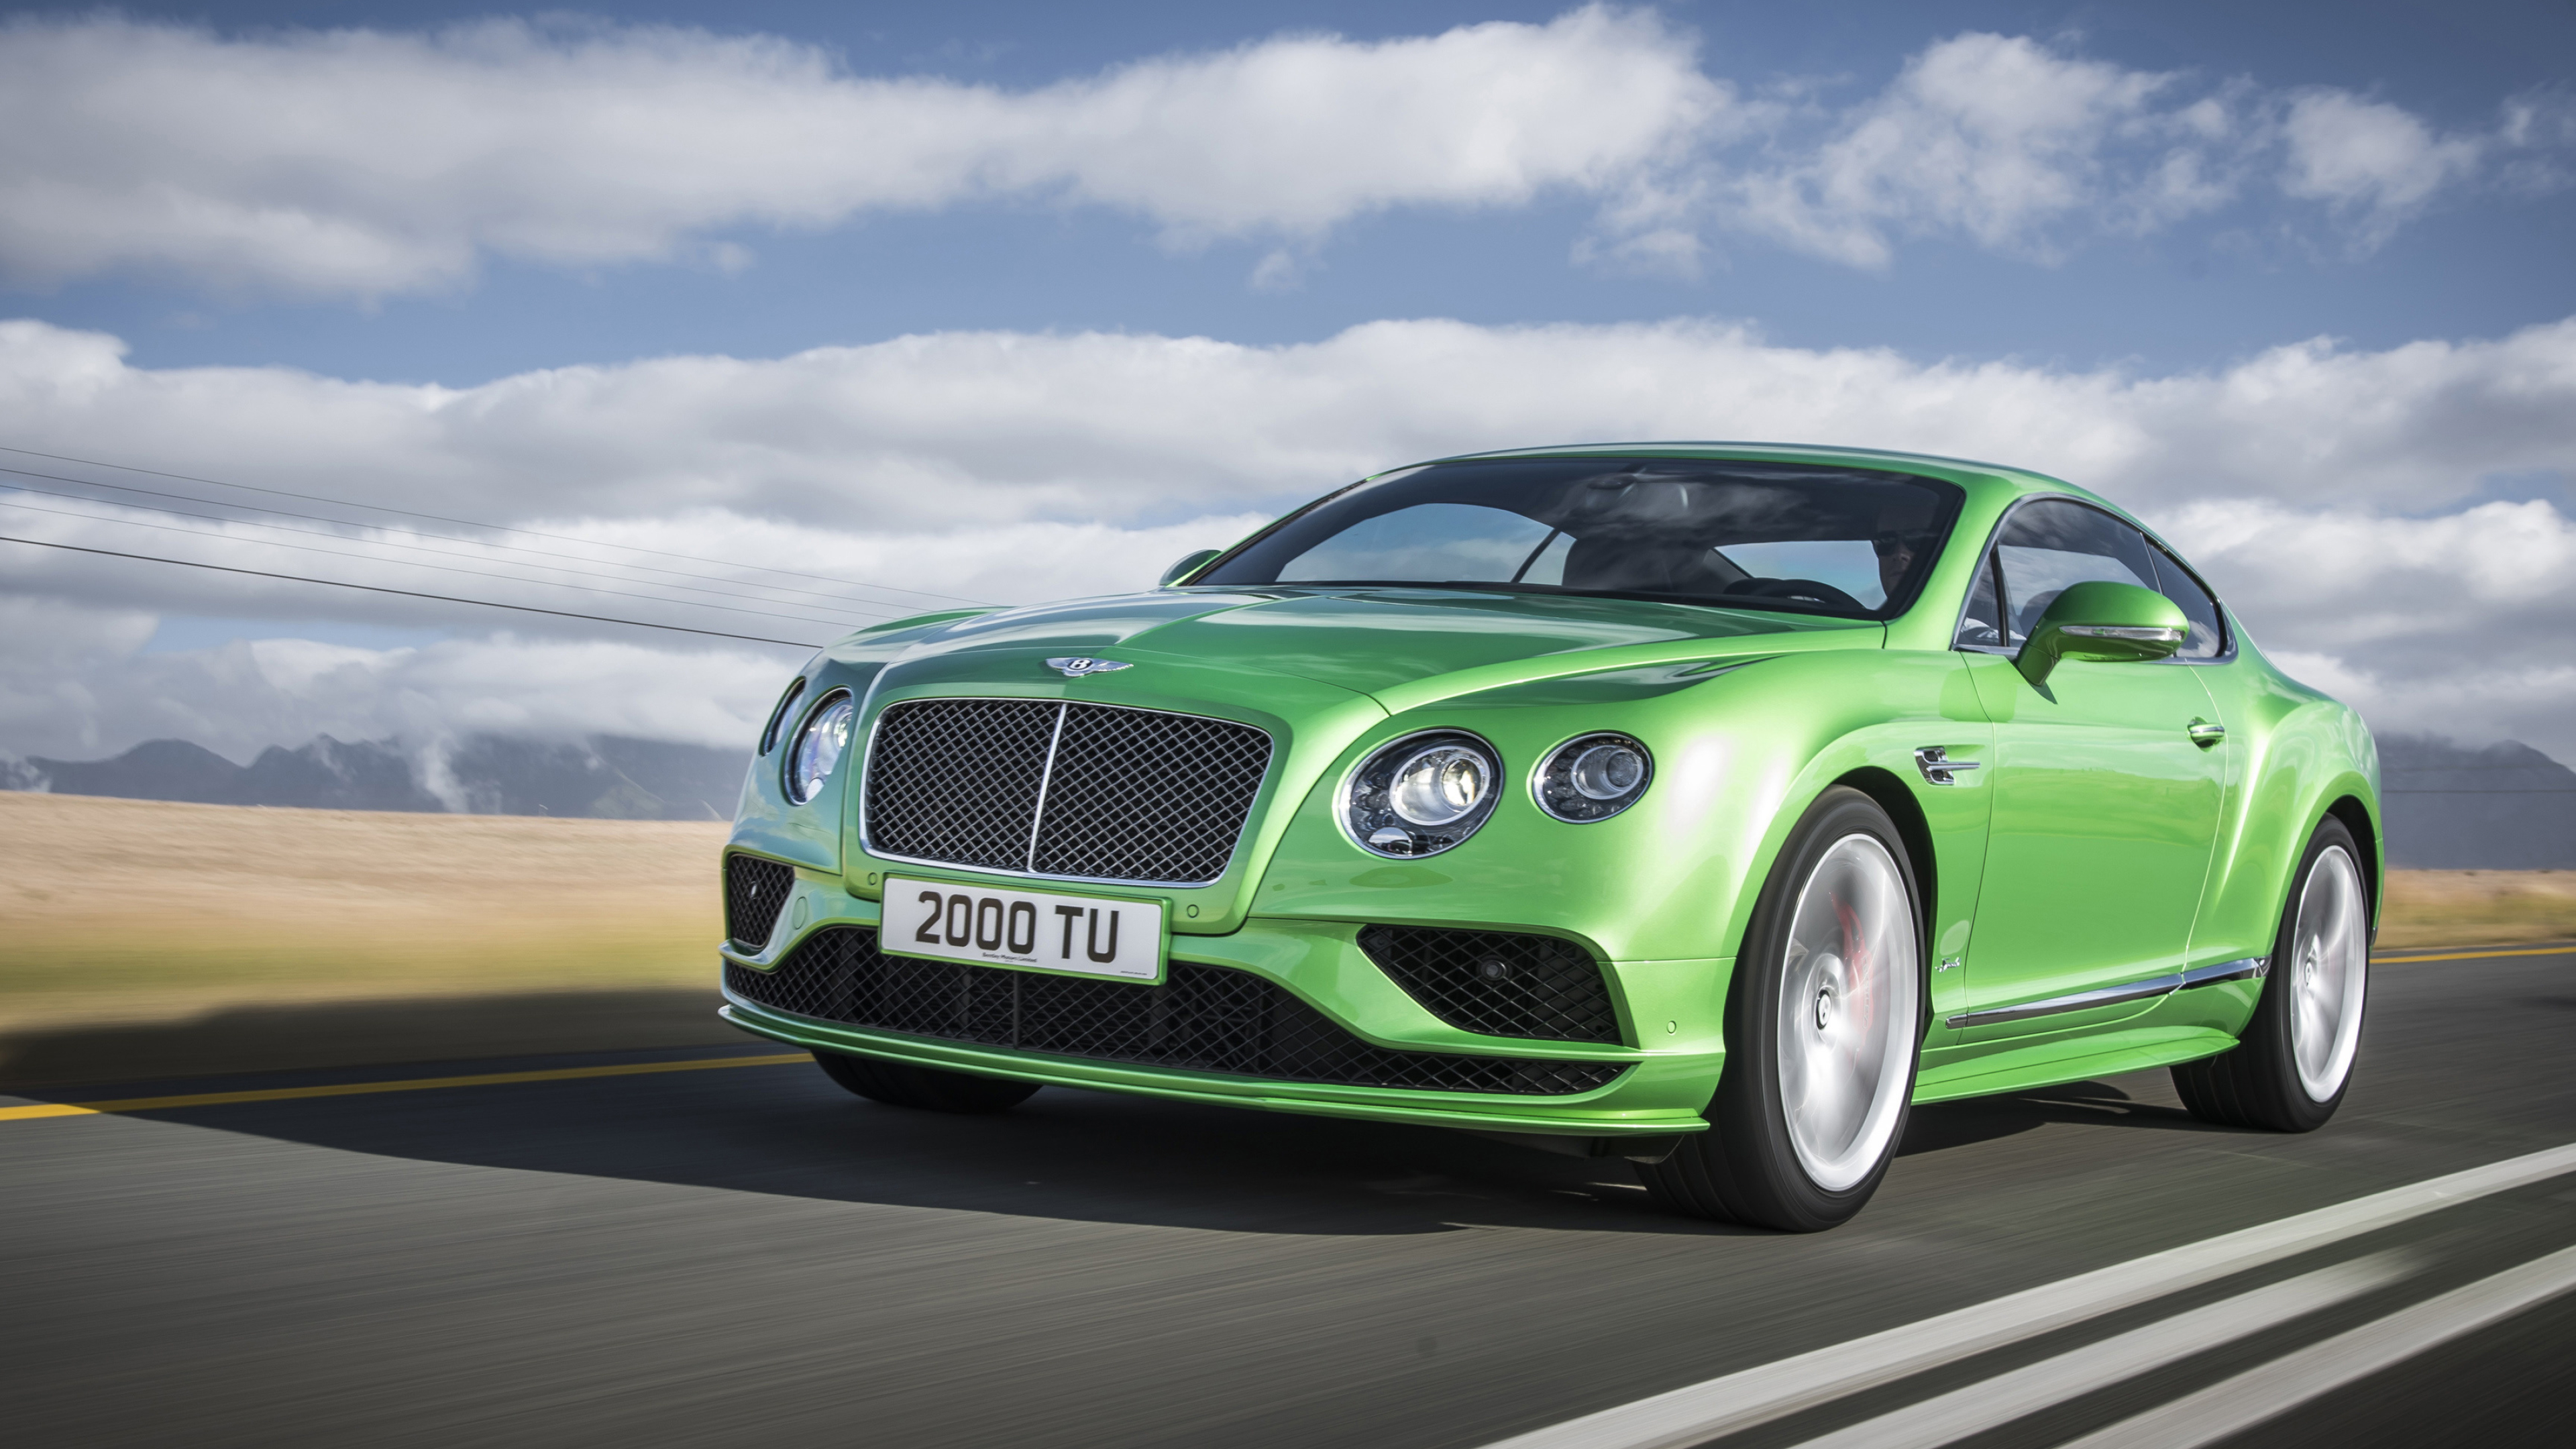 Bentley Continental, Luxury car, High-end performance, Stylish design, 3840x2160 4K Desktop